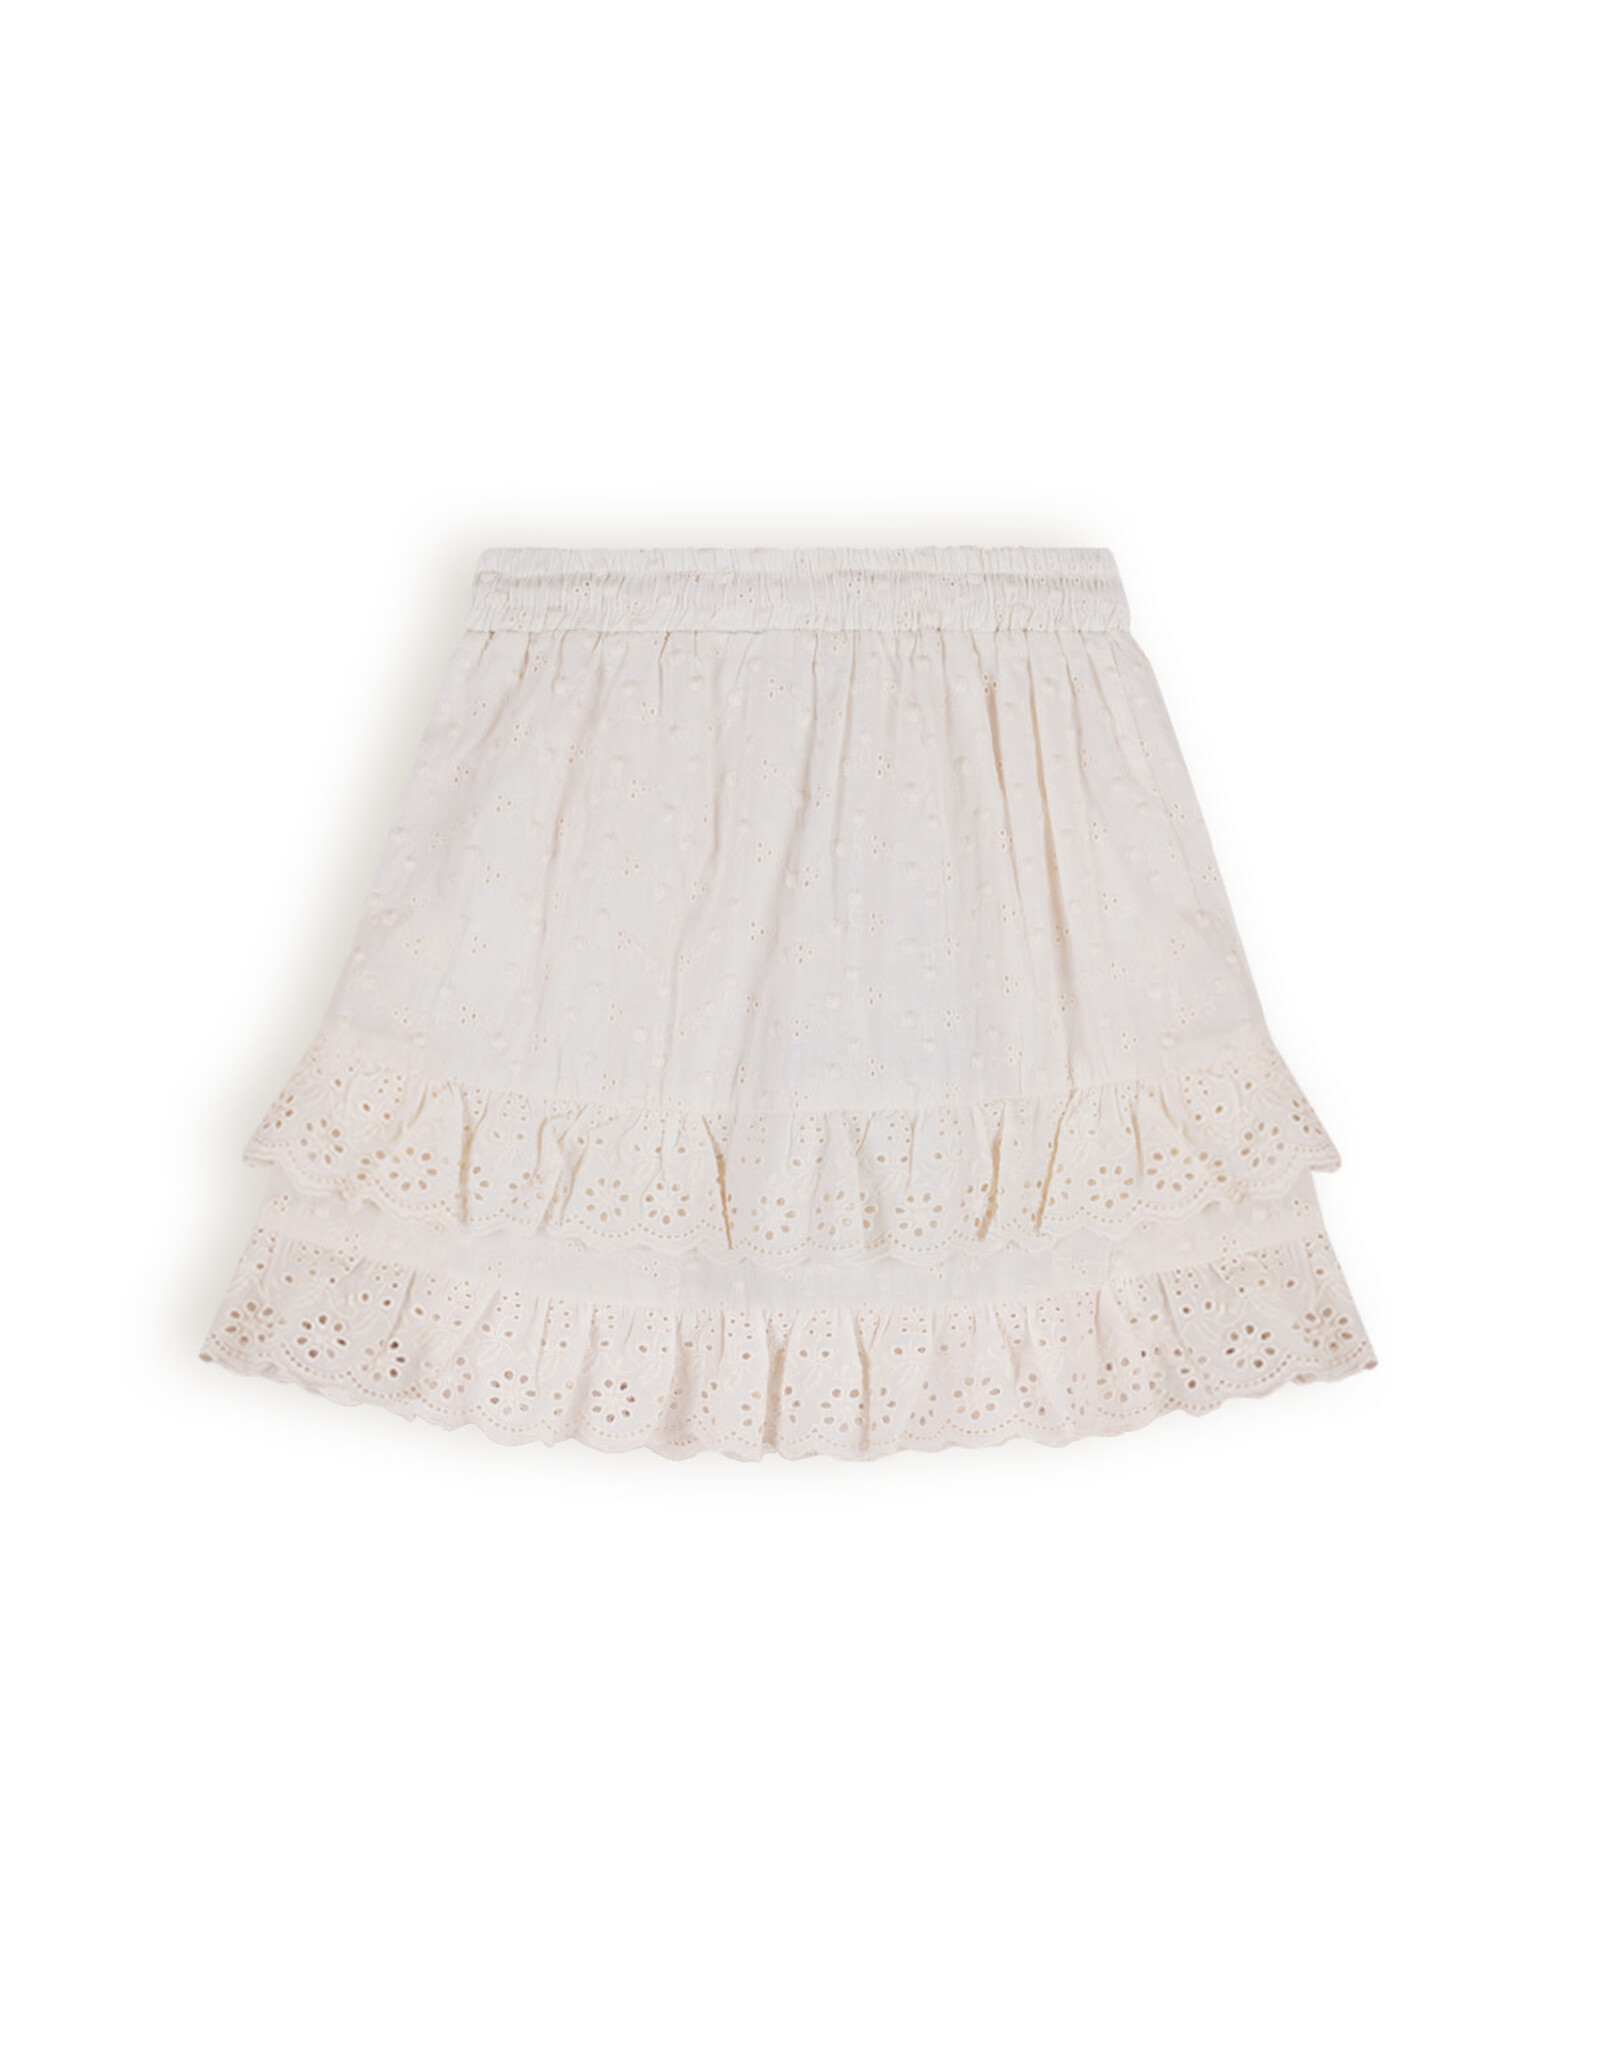 Nono Niu embroidered Skirt Pearled Ivory